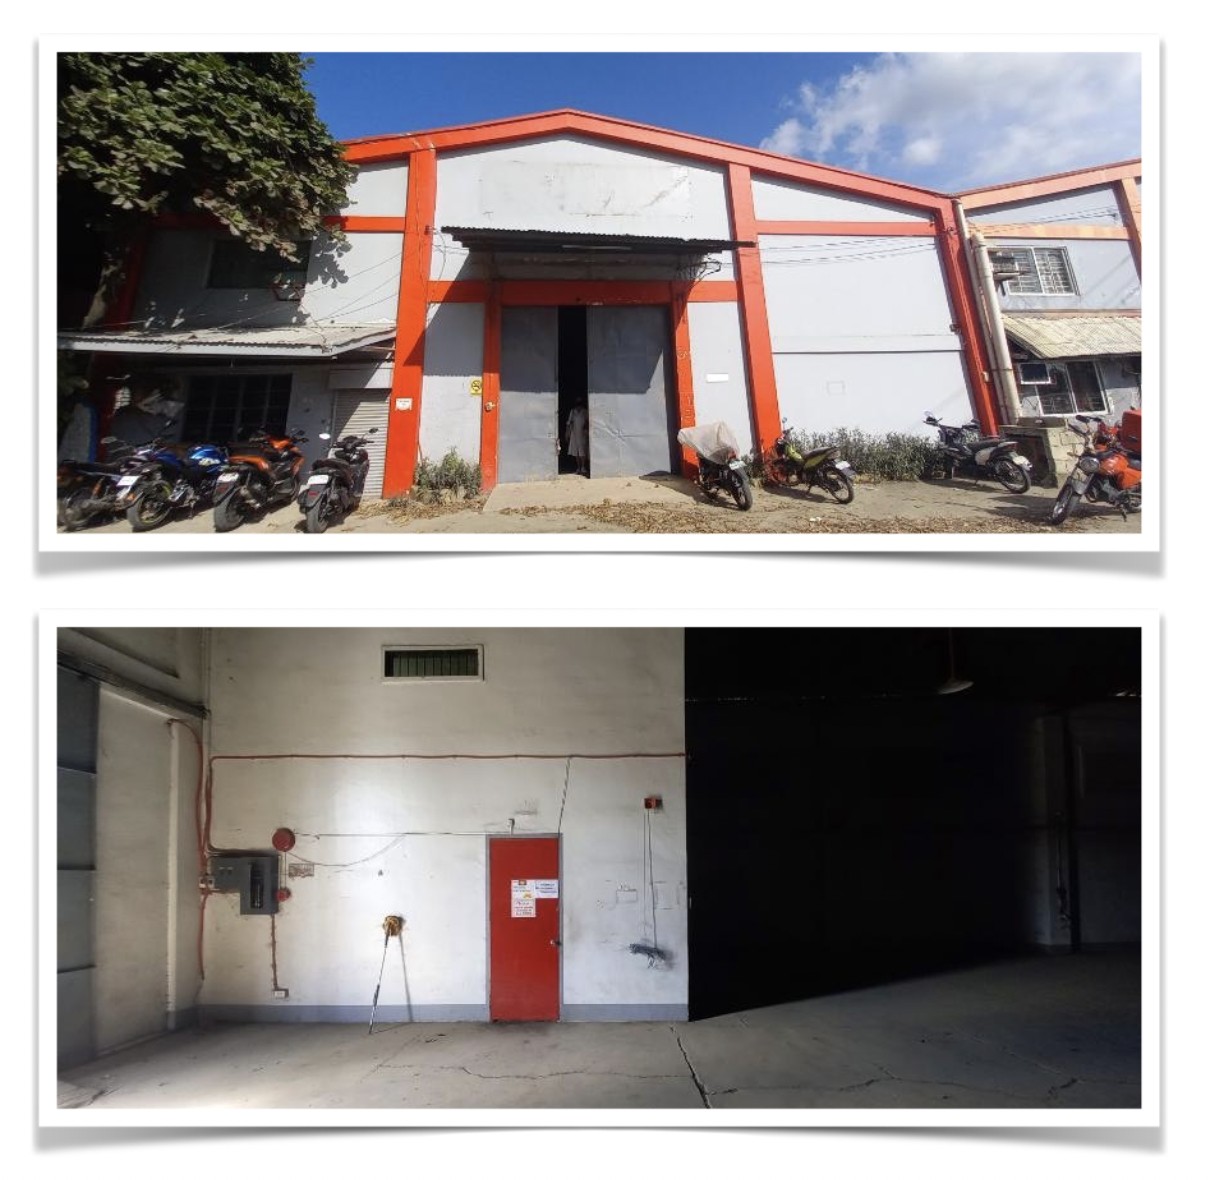 warehouse-near-robinsons-place-pavia-ilo-ilo-800-square-meters